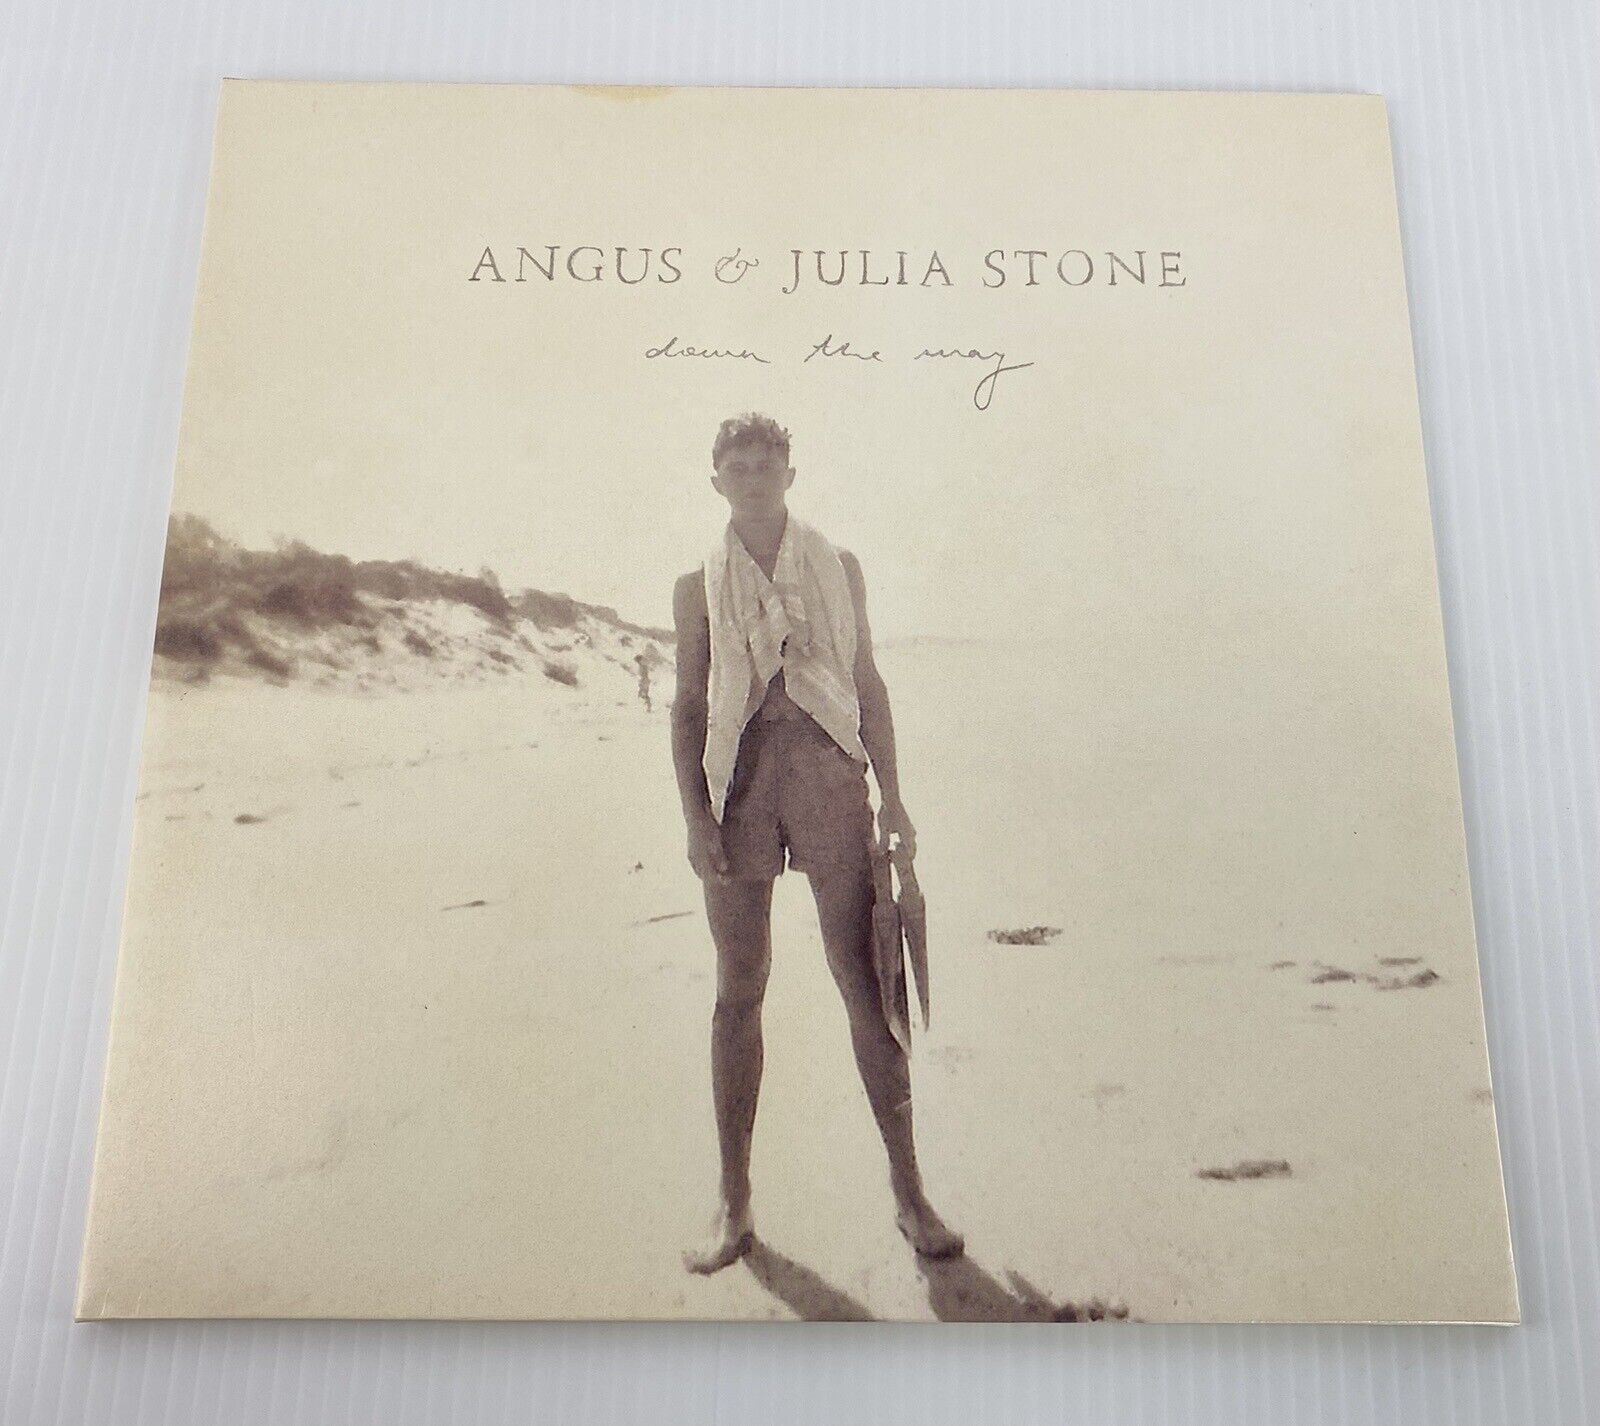 Angus & Julia Stone - “Down The Way” LP Vinyl 2014